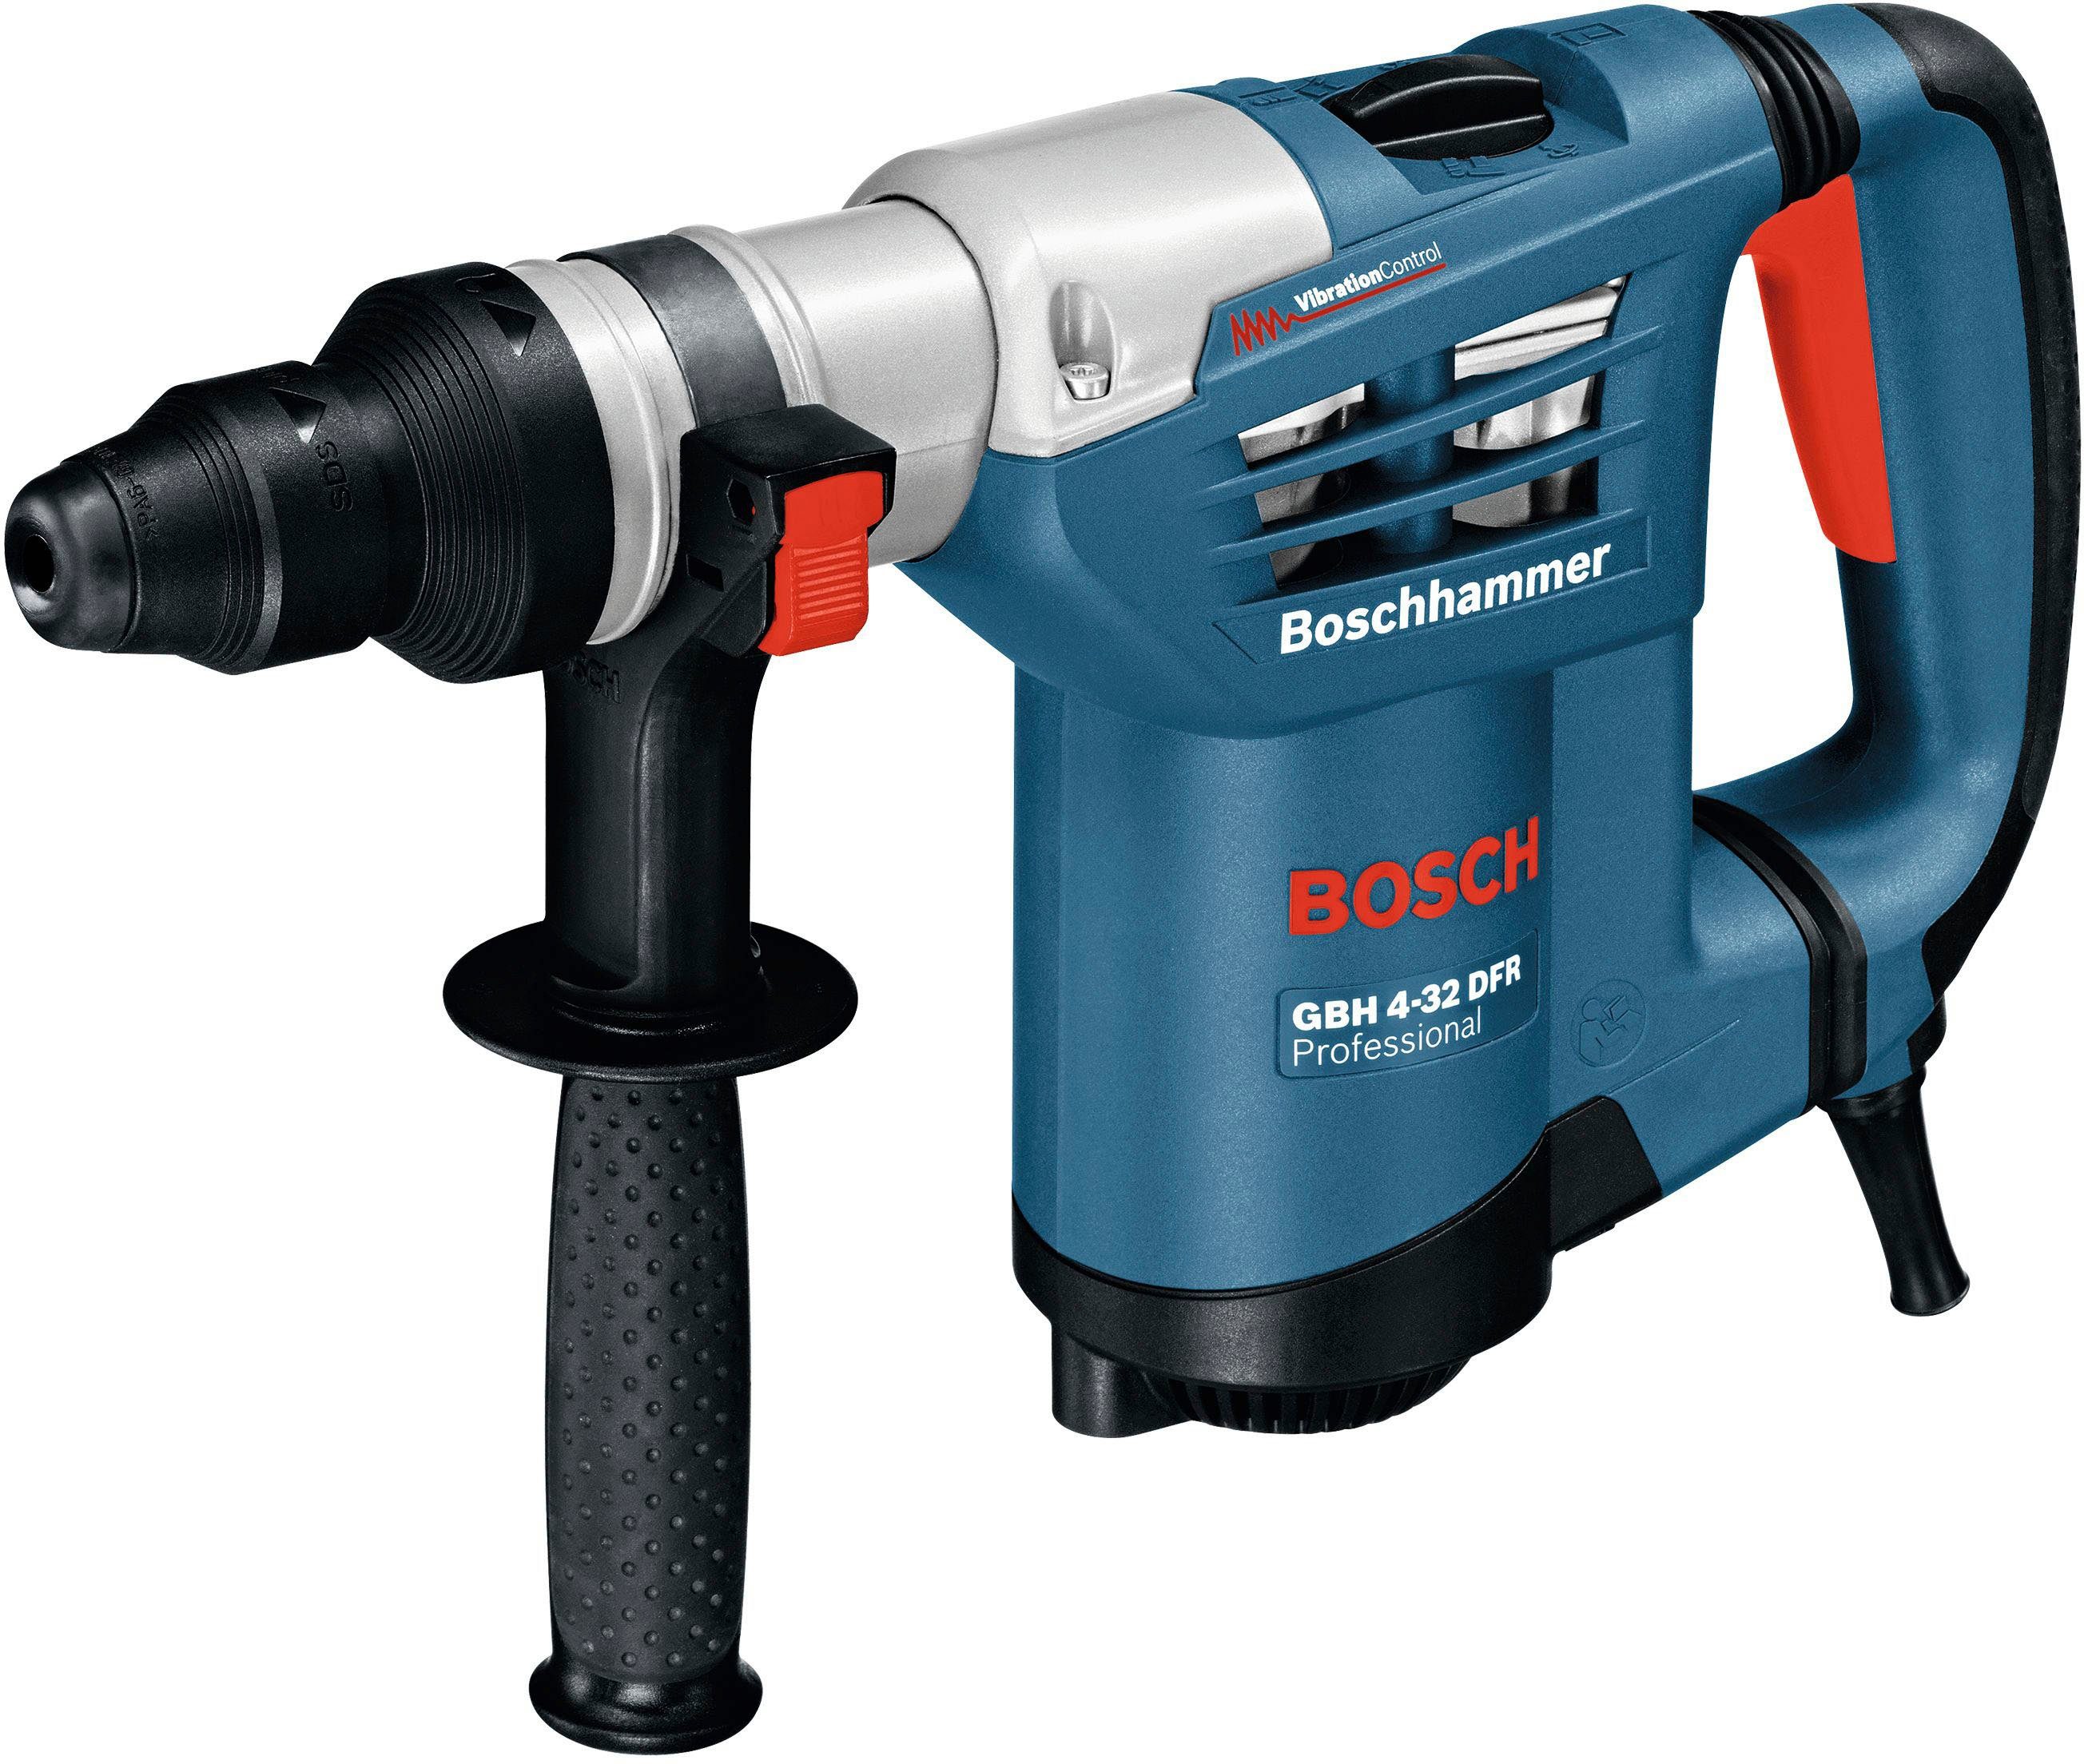 GBH U/min, Professional Bosch DFR, 780 Bohrhammer 4-32 (Set) max.